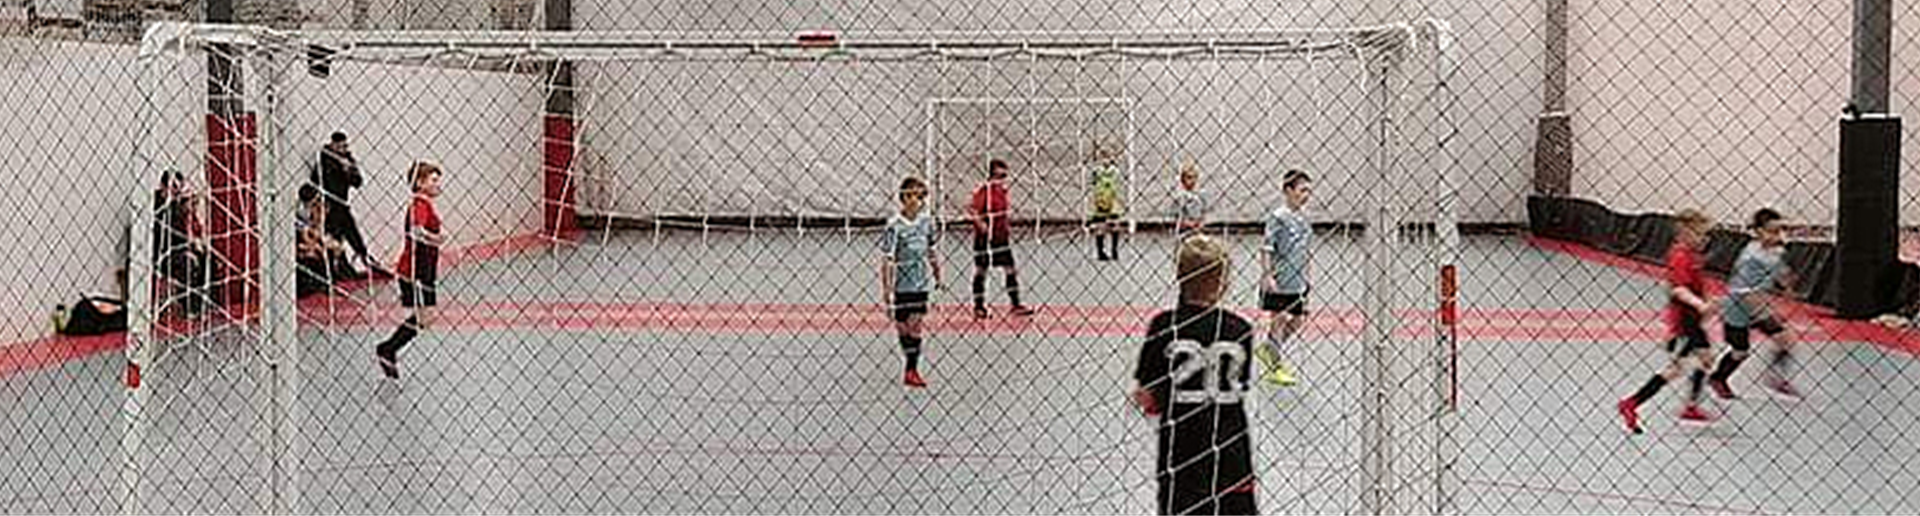 NW Futsal